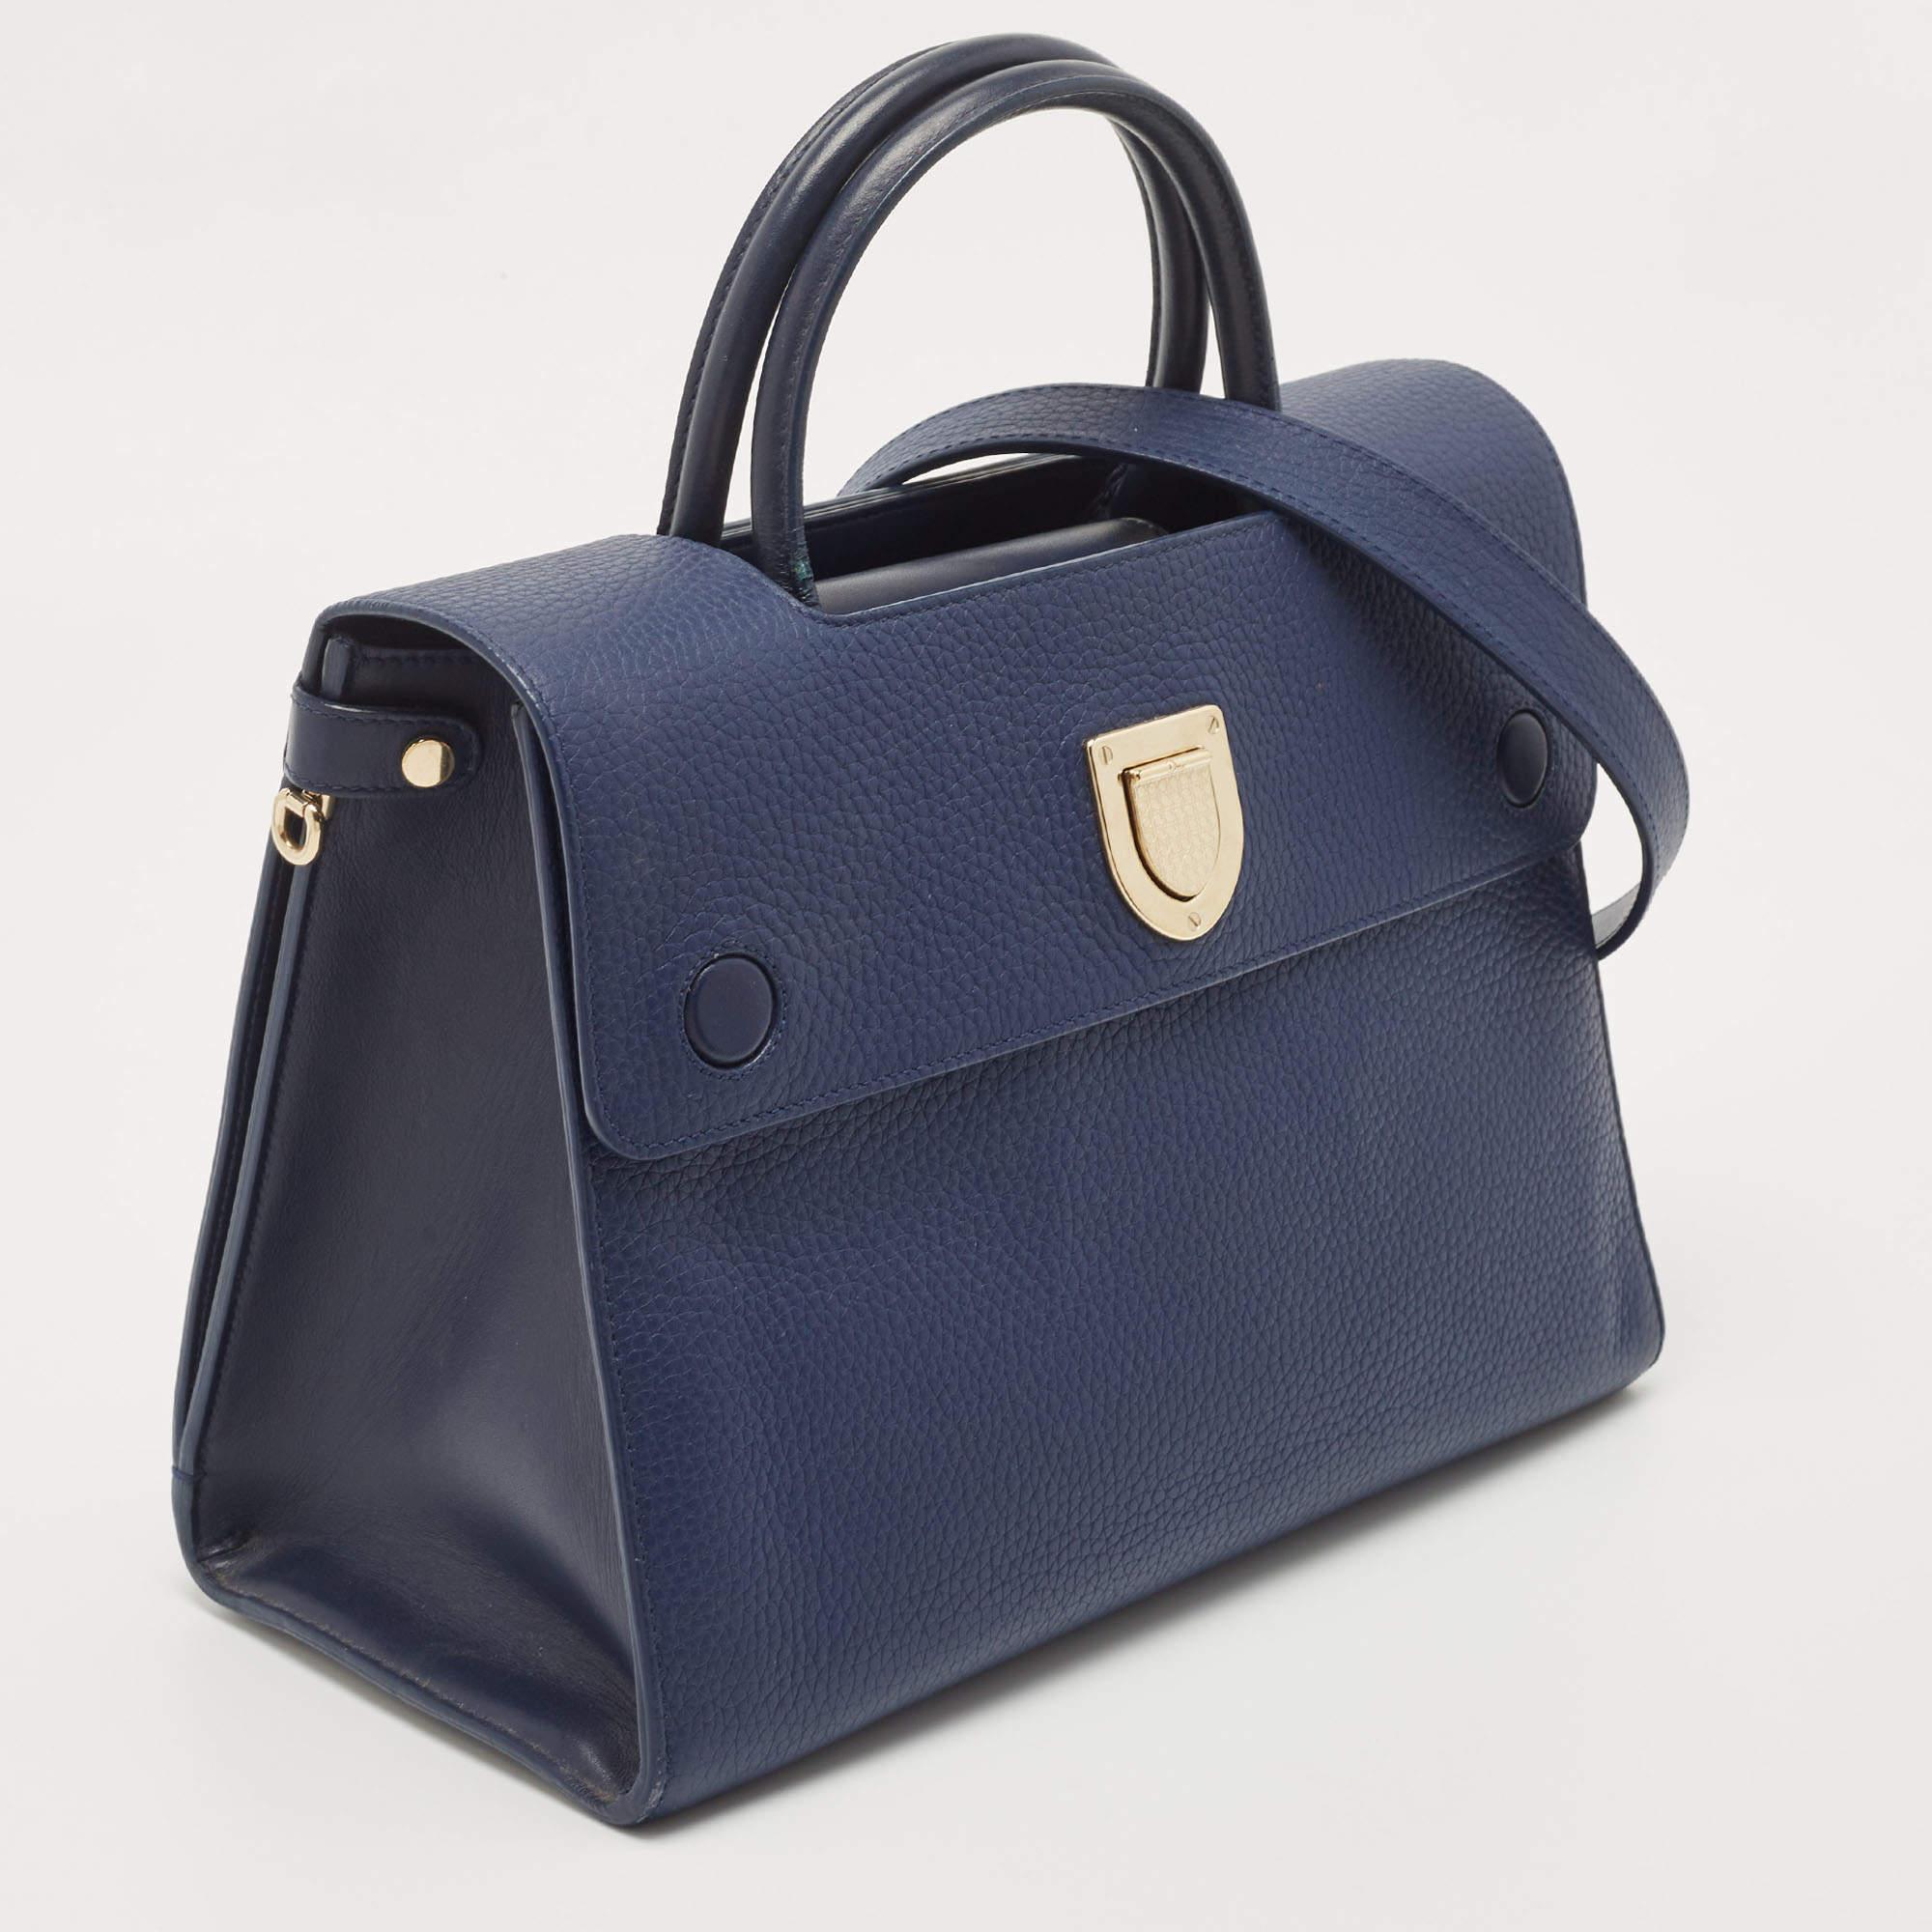 Dior Blue Leather Medium Diorever Bag In Good Condition For Sale In Dubai, Al Qouz 2